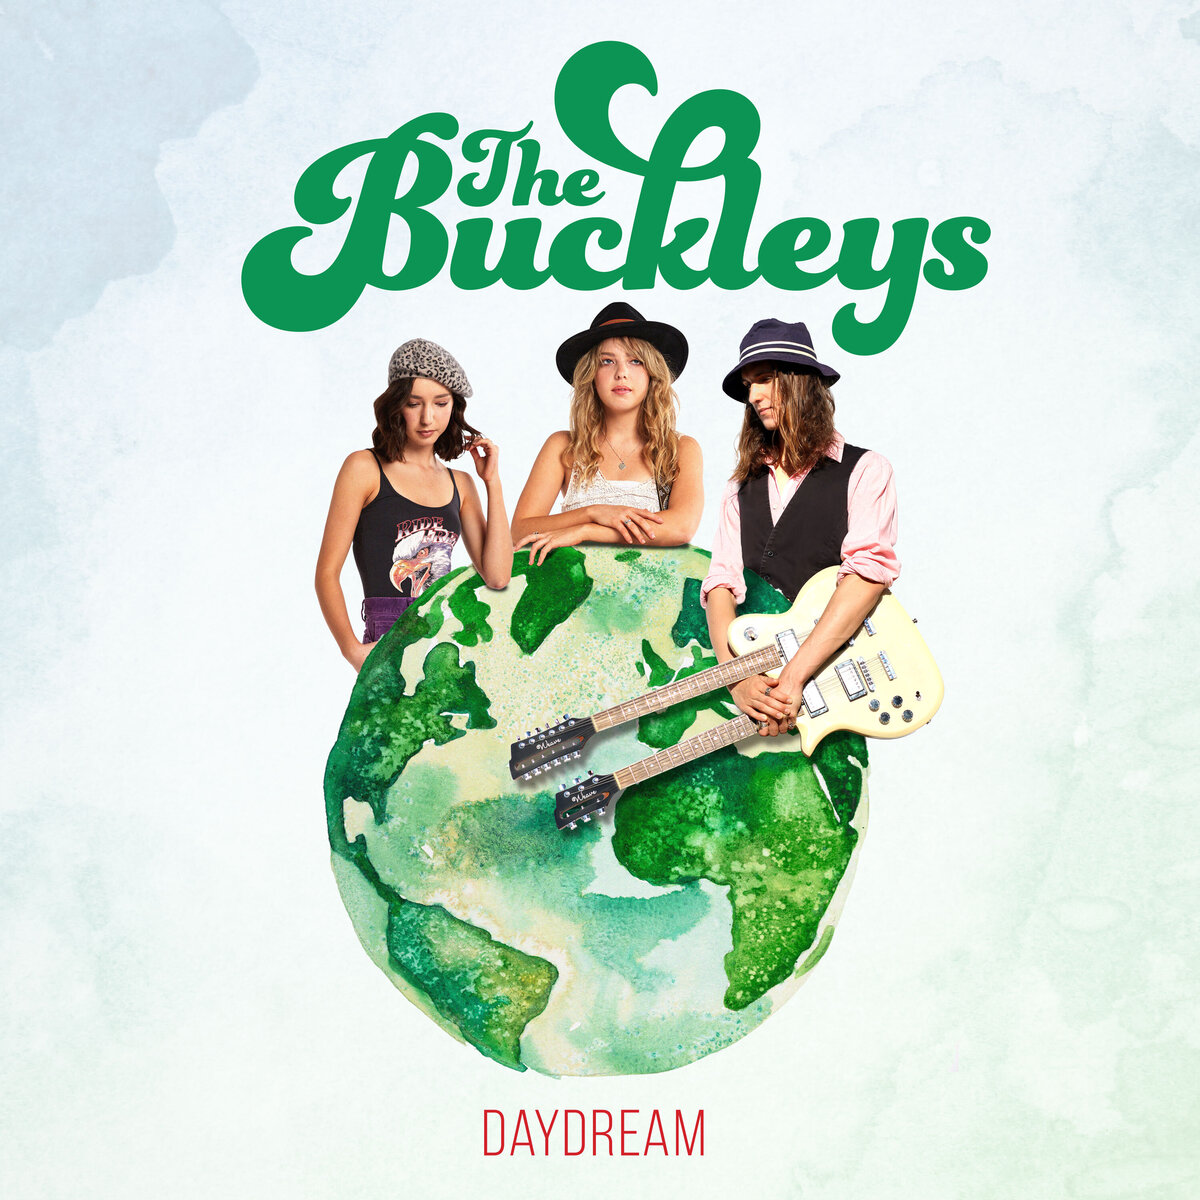 The Buckleys Daydream (Album)